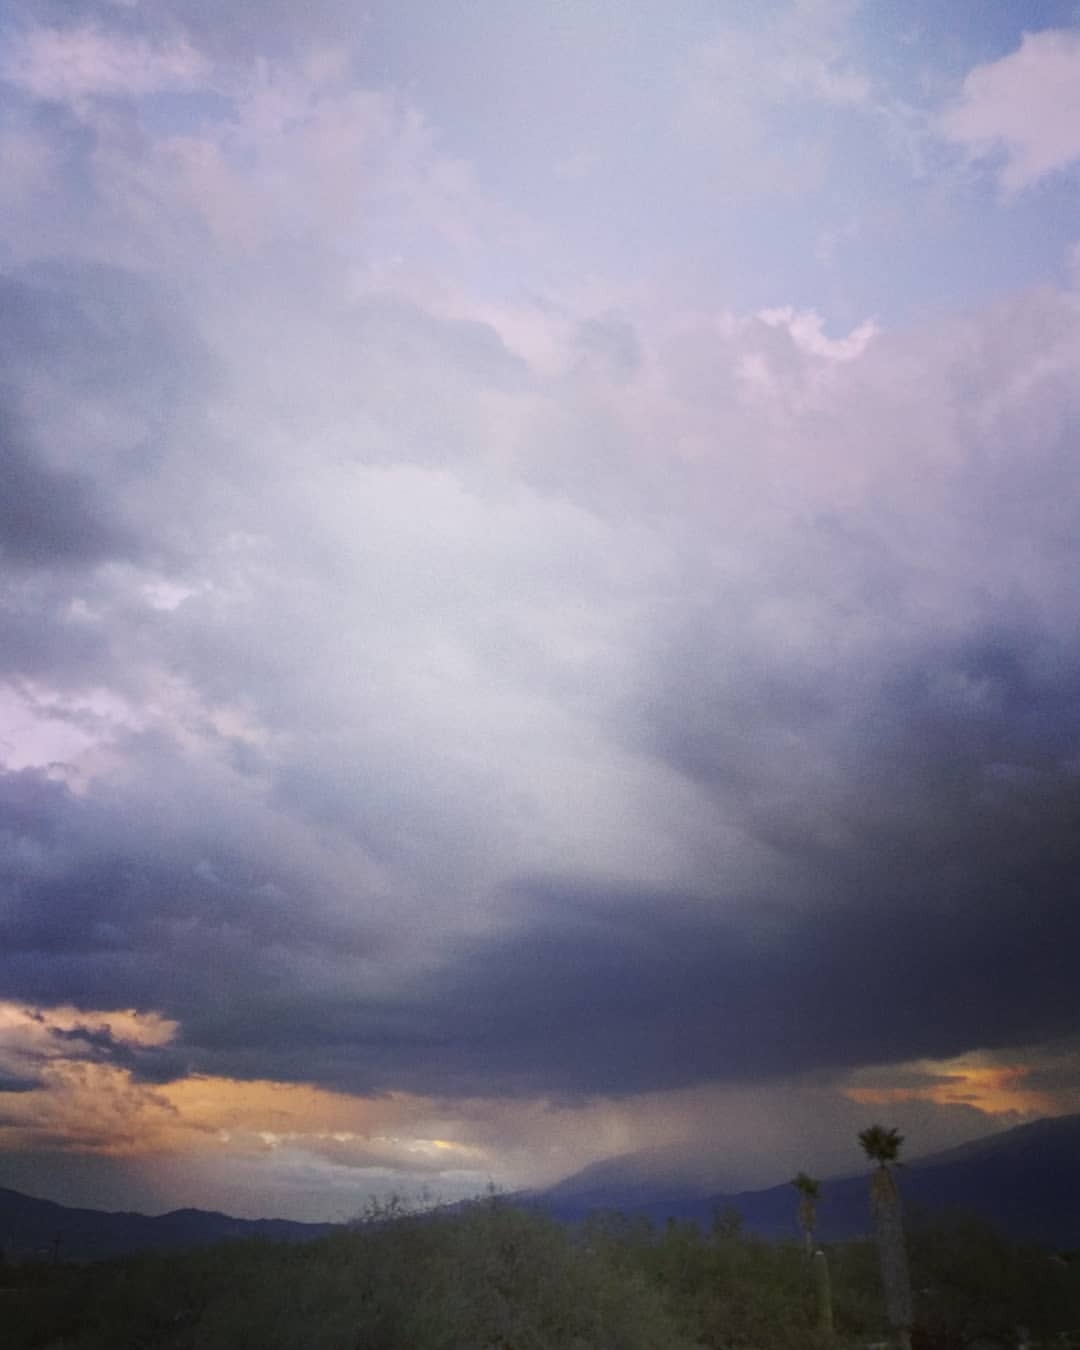 #rain from the other night…from our front porch #tucson #instagramaz
https://www.instagram.com/alannarmejia/p/BpIK3hGjcTN/?utm_source=ig_tumblr_share&igshid=uzzb1nhgun1f